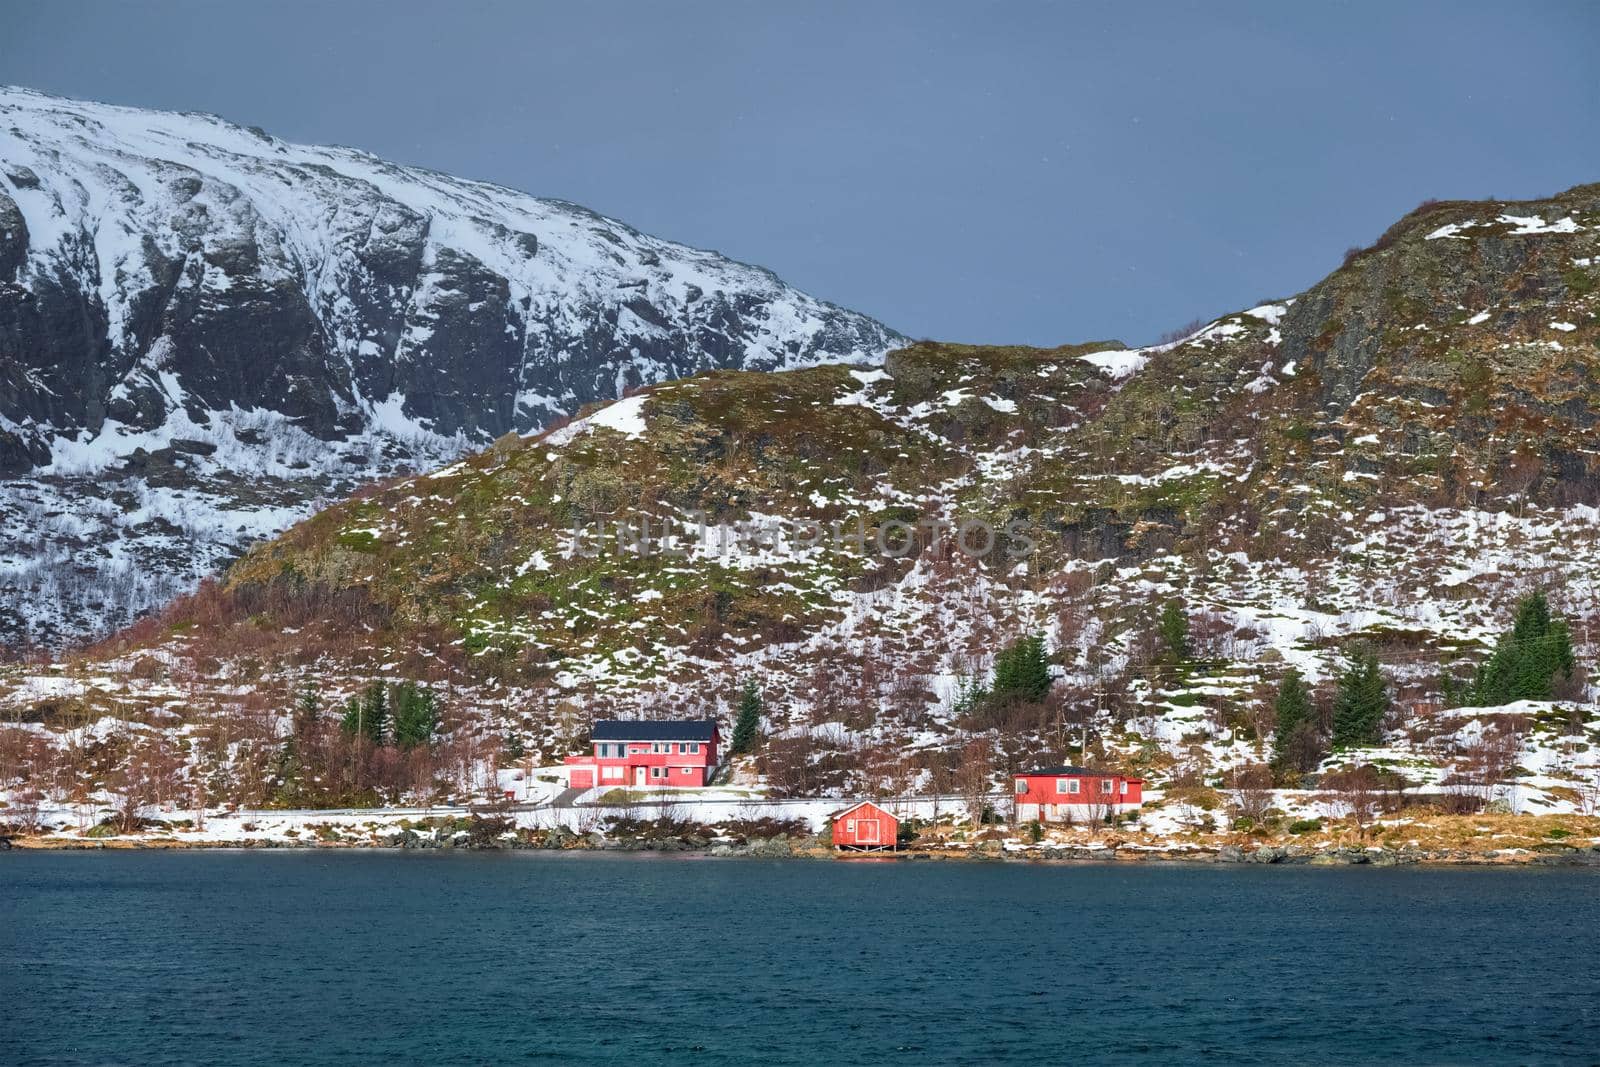 Red rorbu houses in Norway in winter by dimol